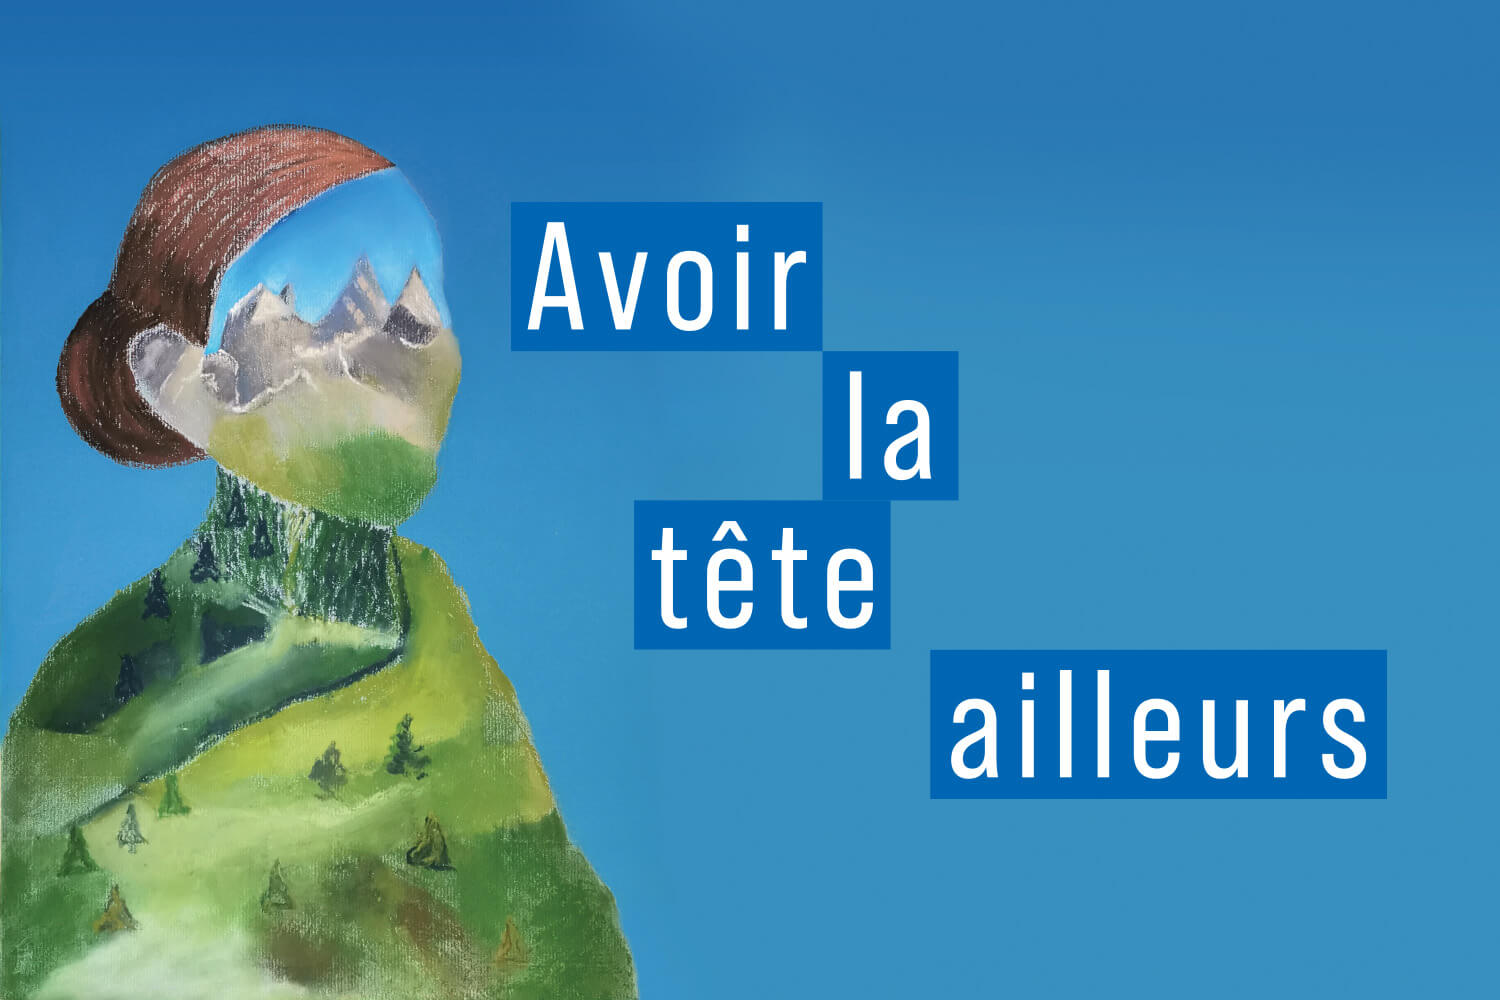 French Expressions Using "Tête": avoir la tête ailleurs